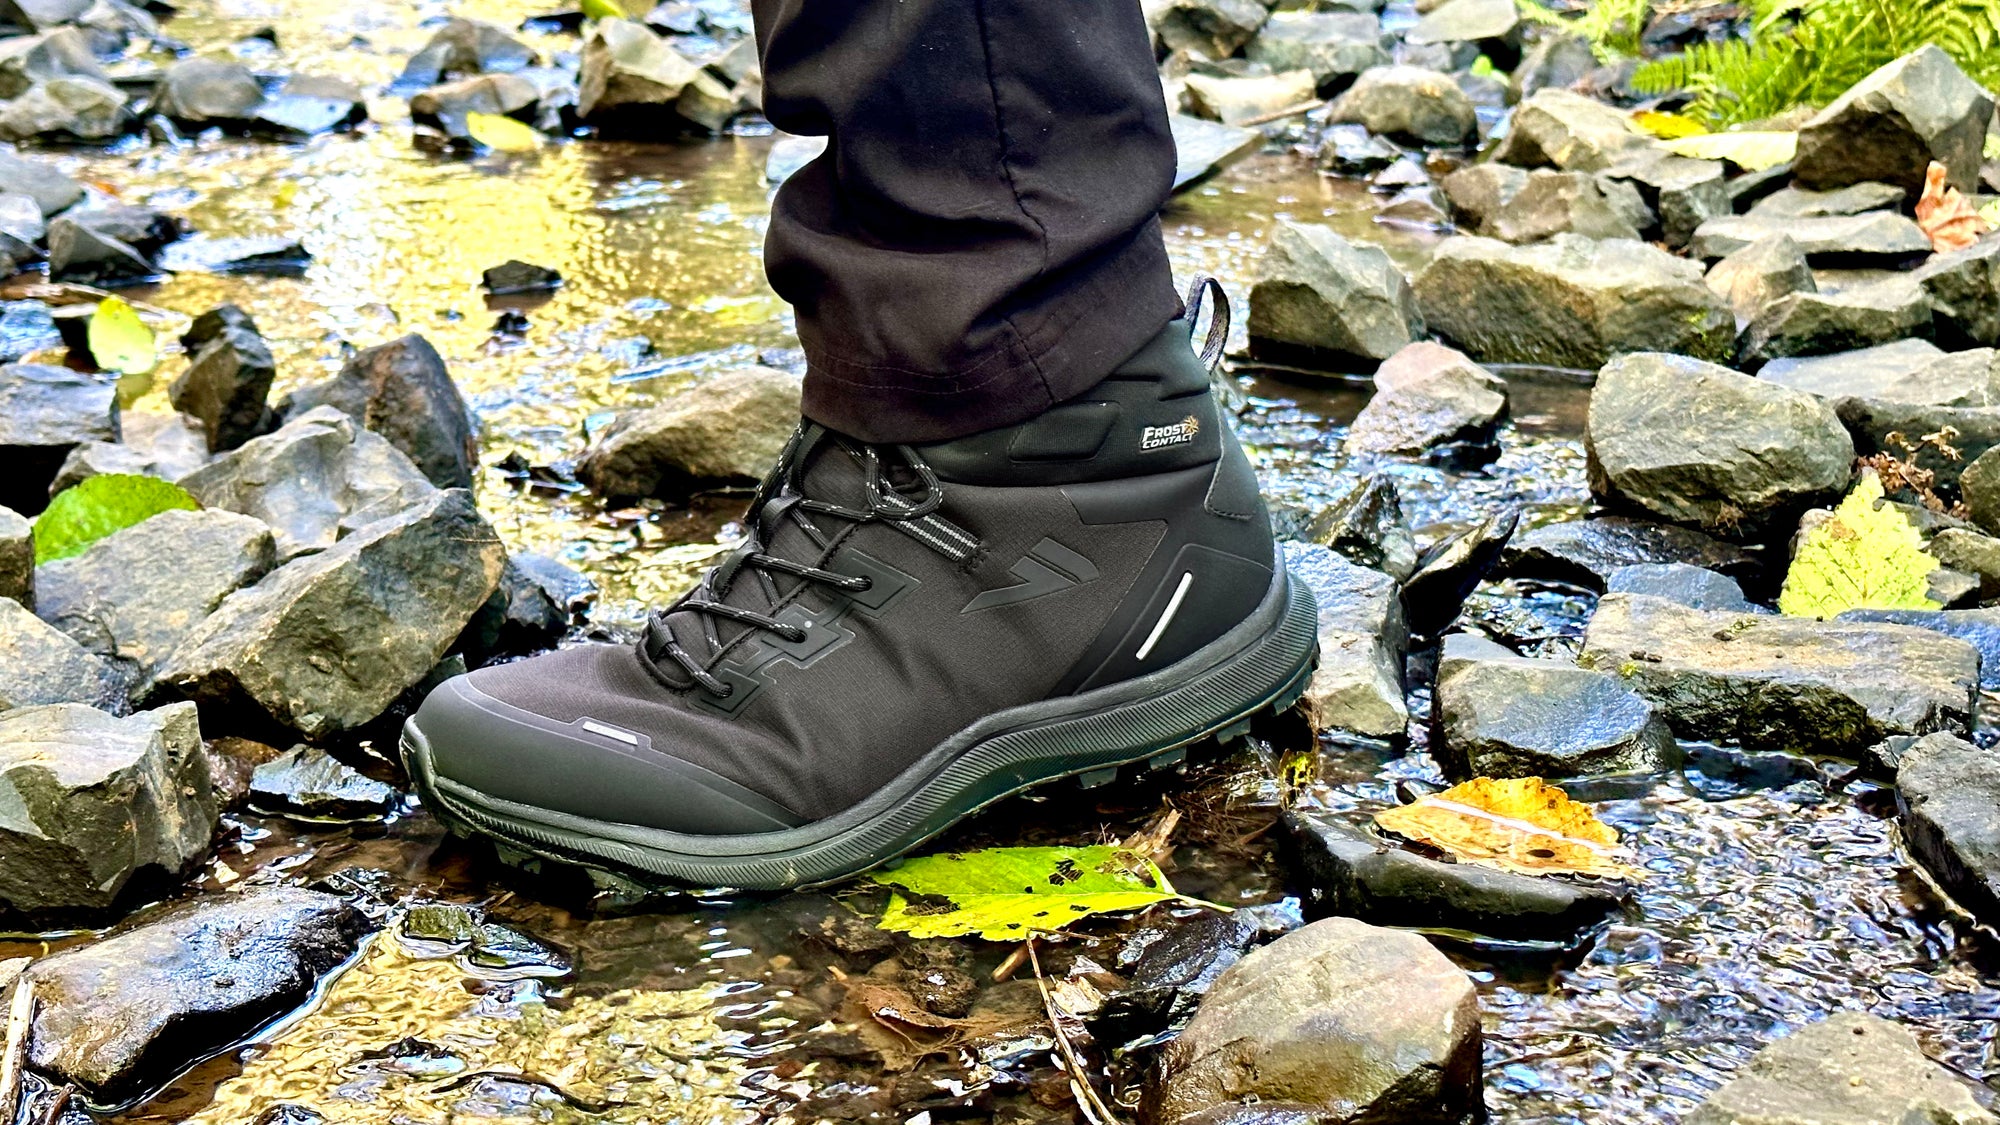 VJ Artix lightweight waterproof hiking boots